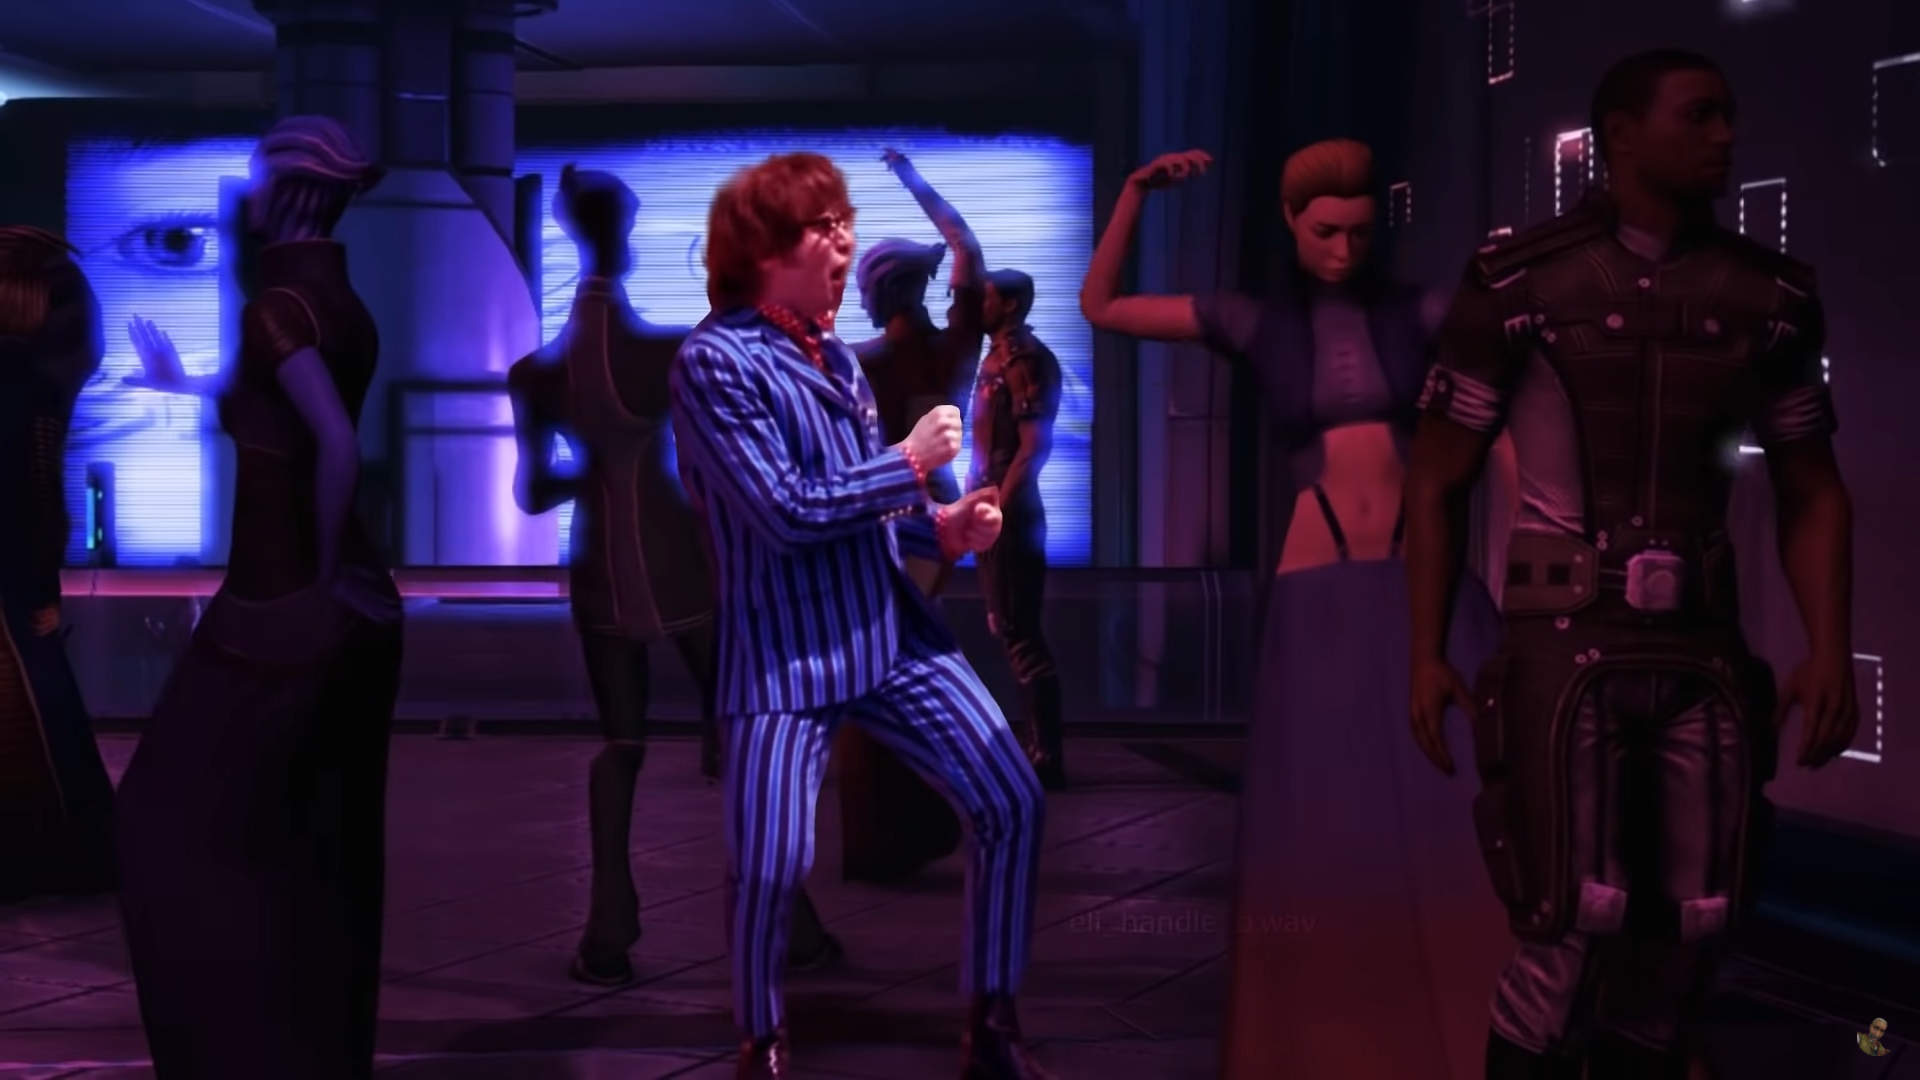 Austin Powers dancing in Mass Effect.